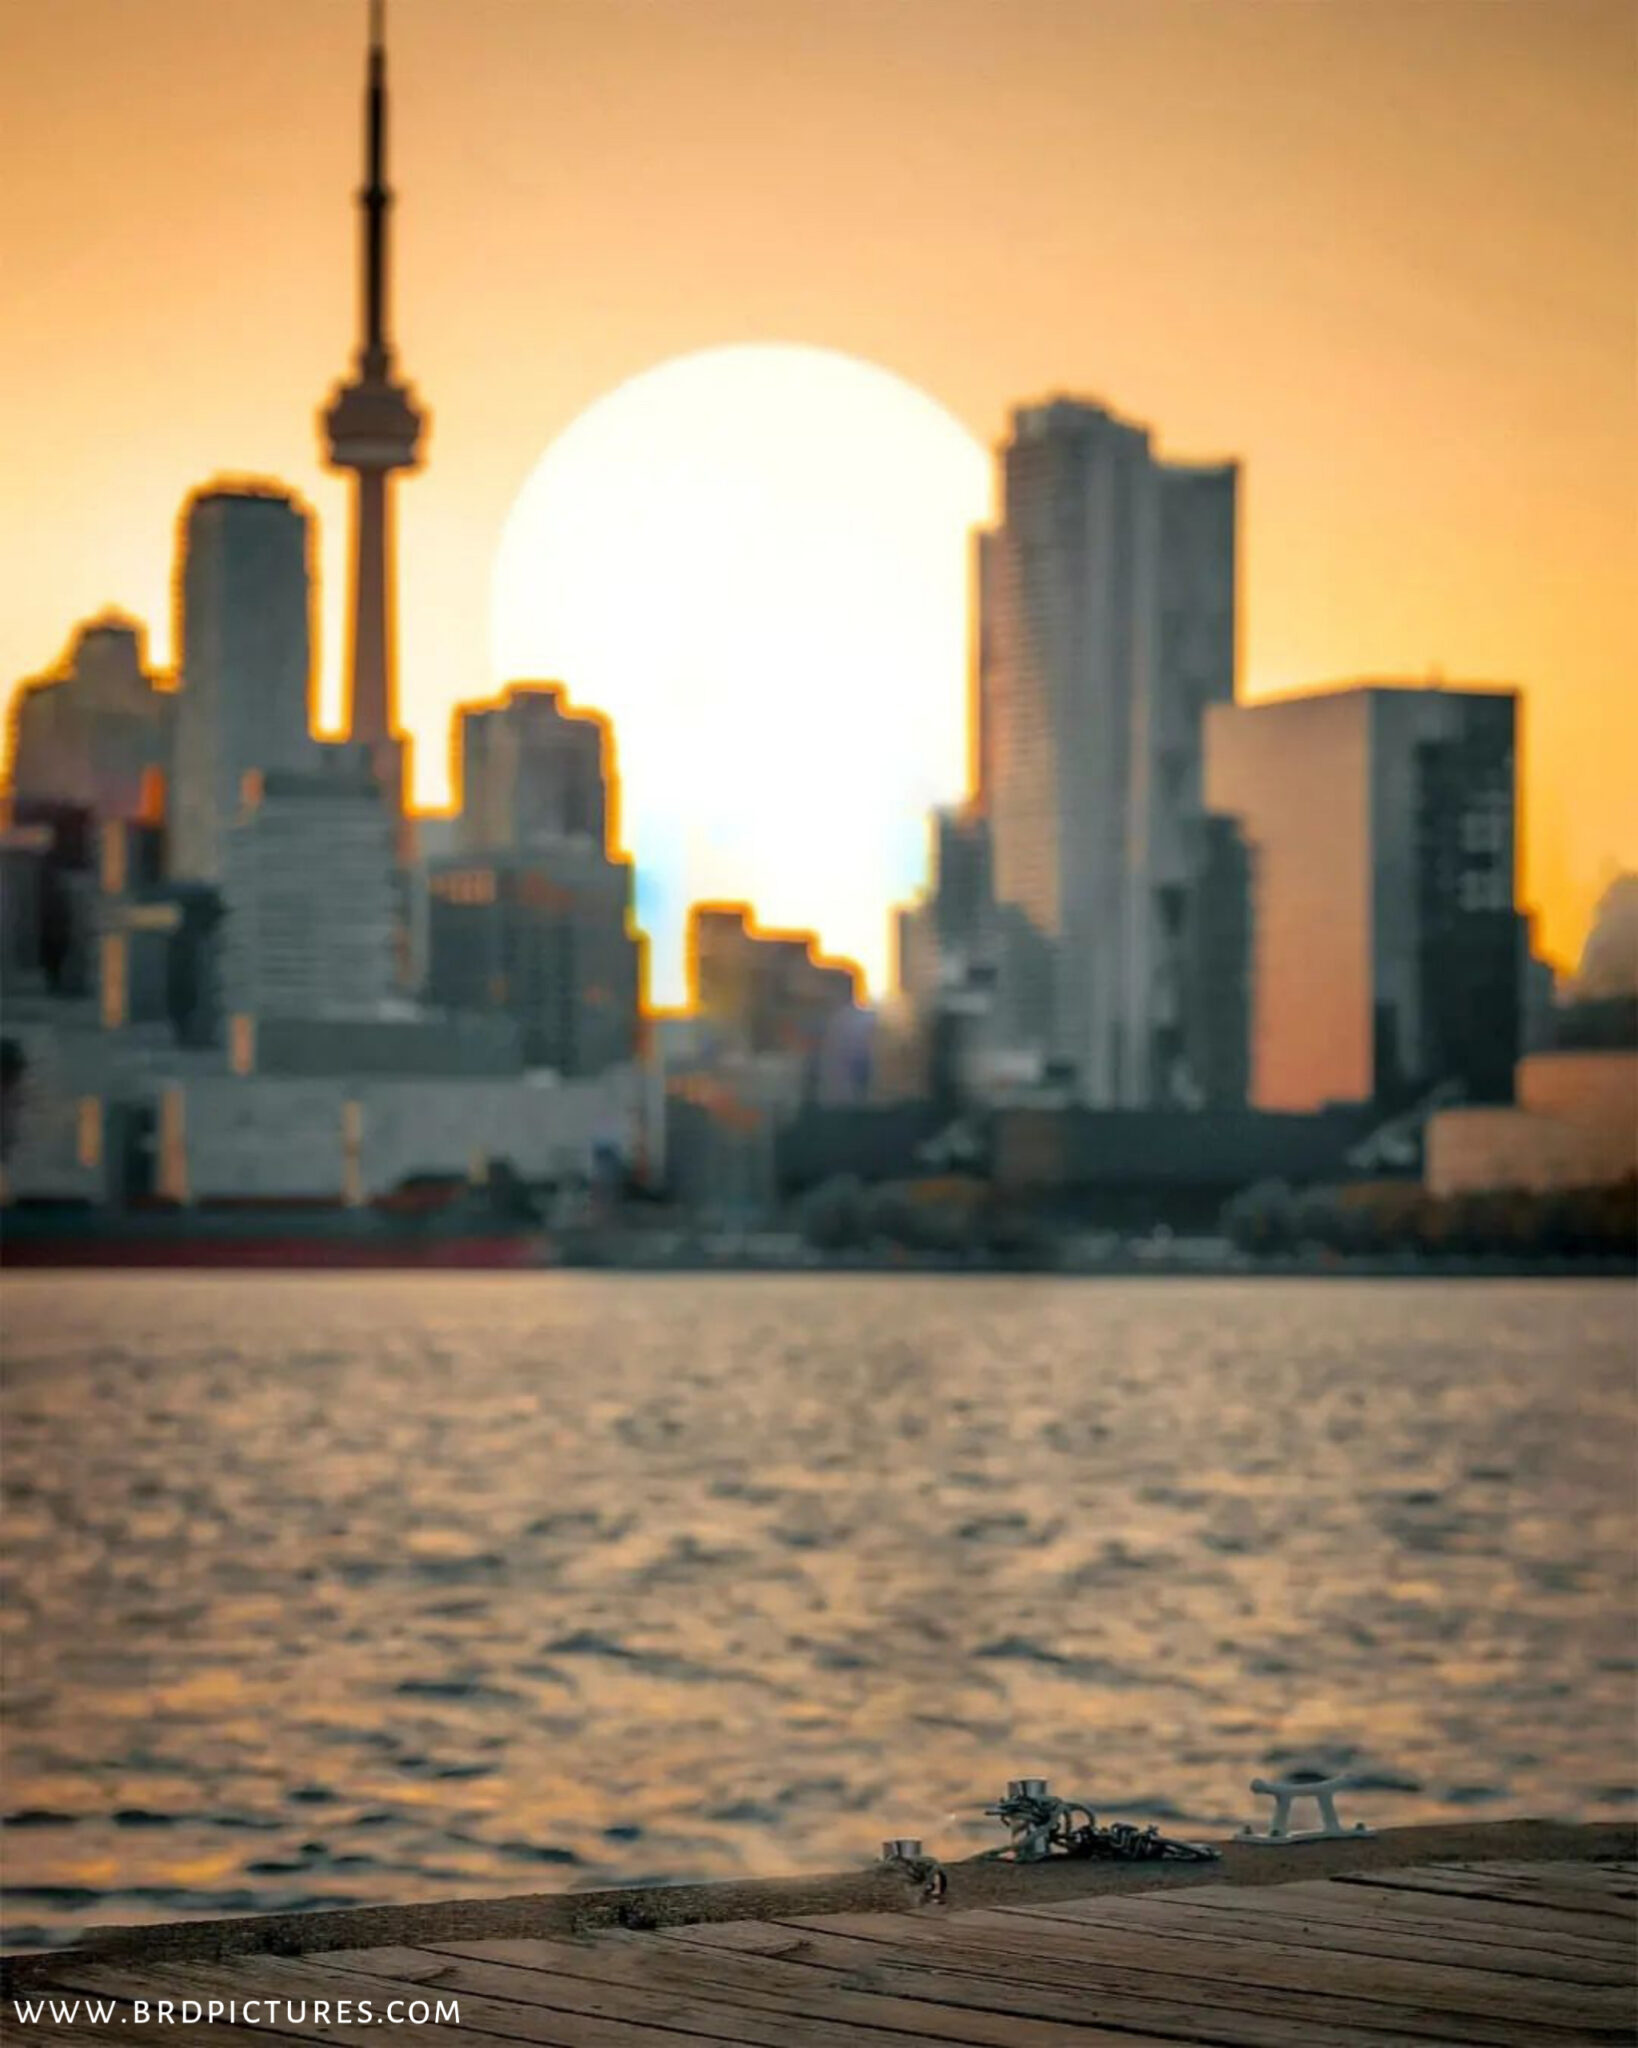 City Sun Nature Editing Background Image